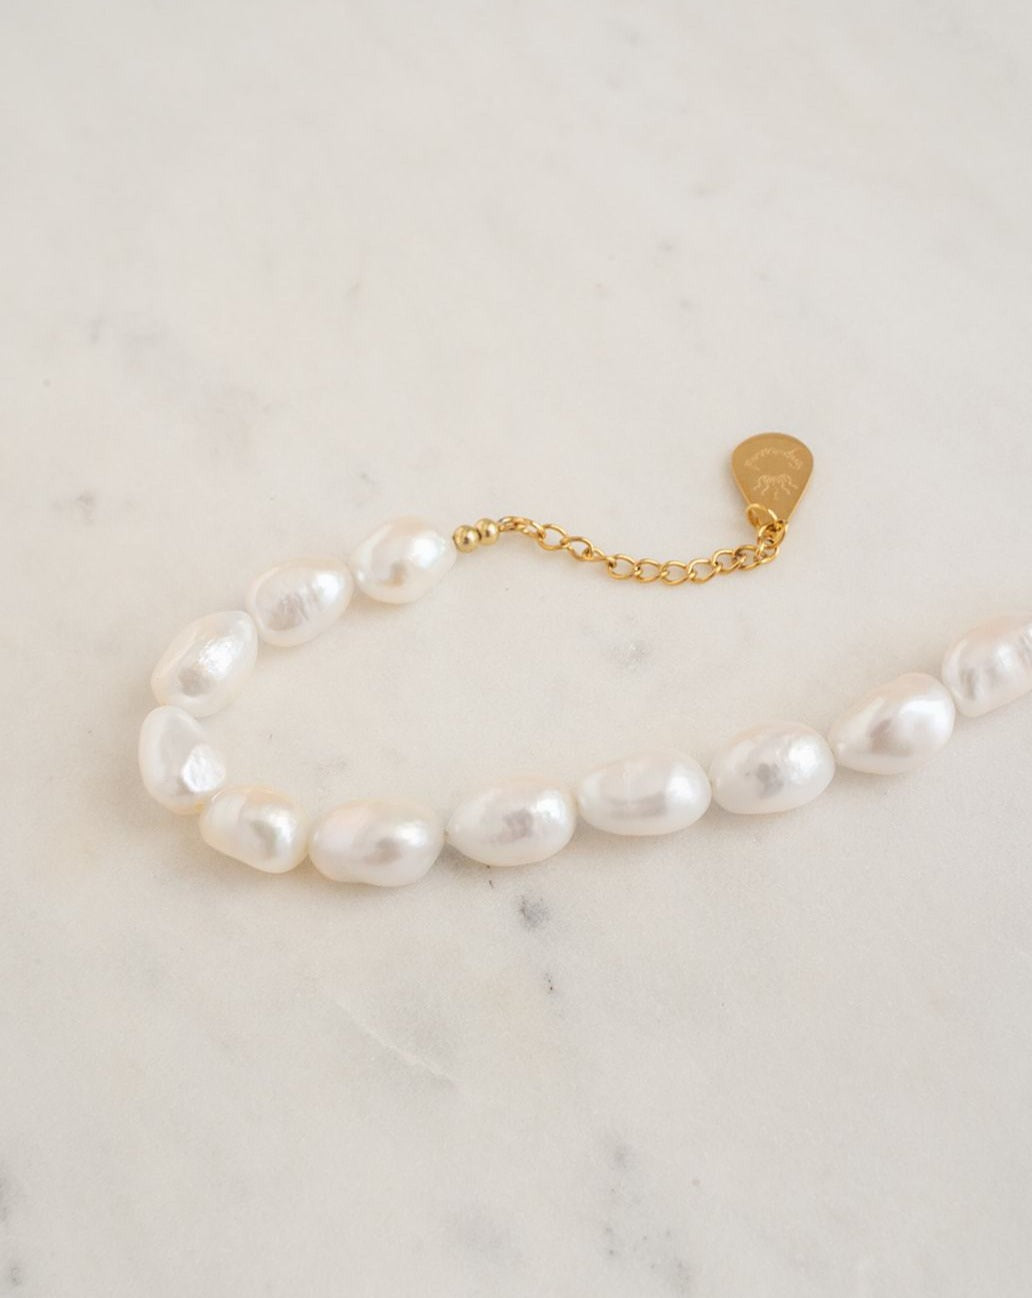 Genuine pearl bracelet